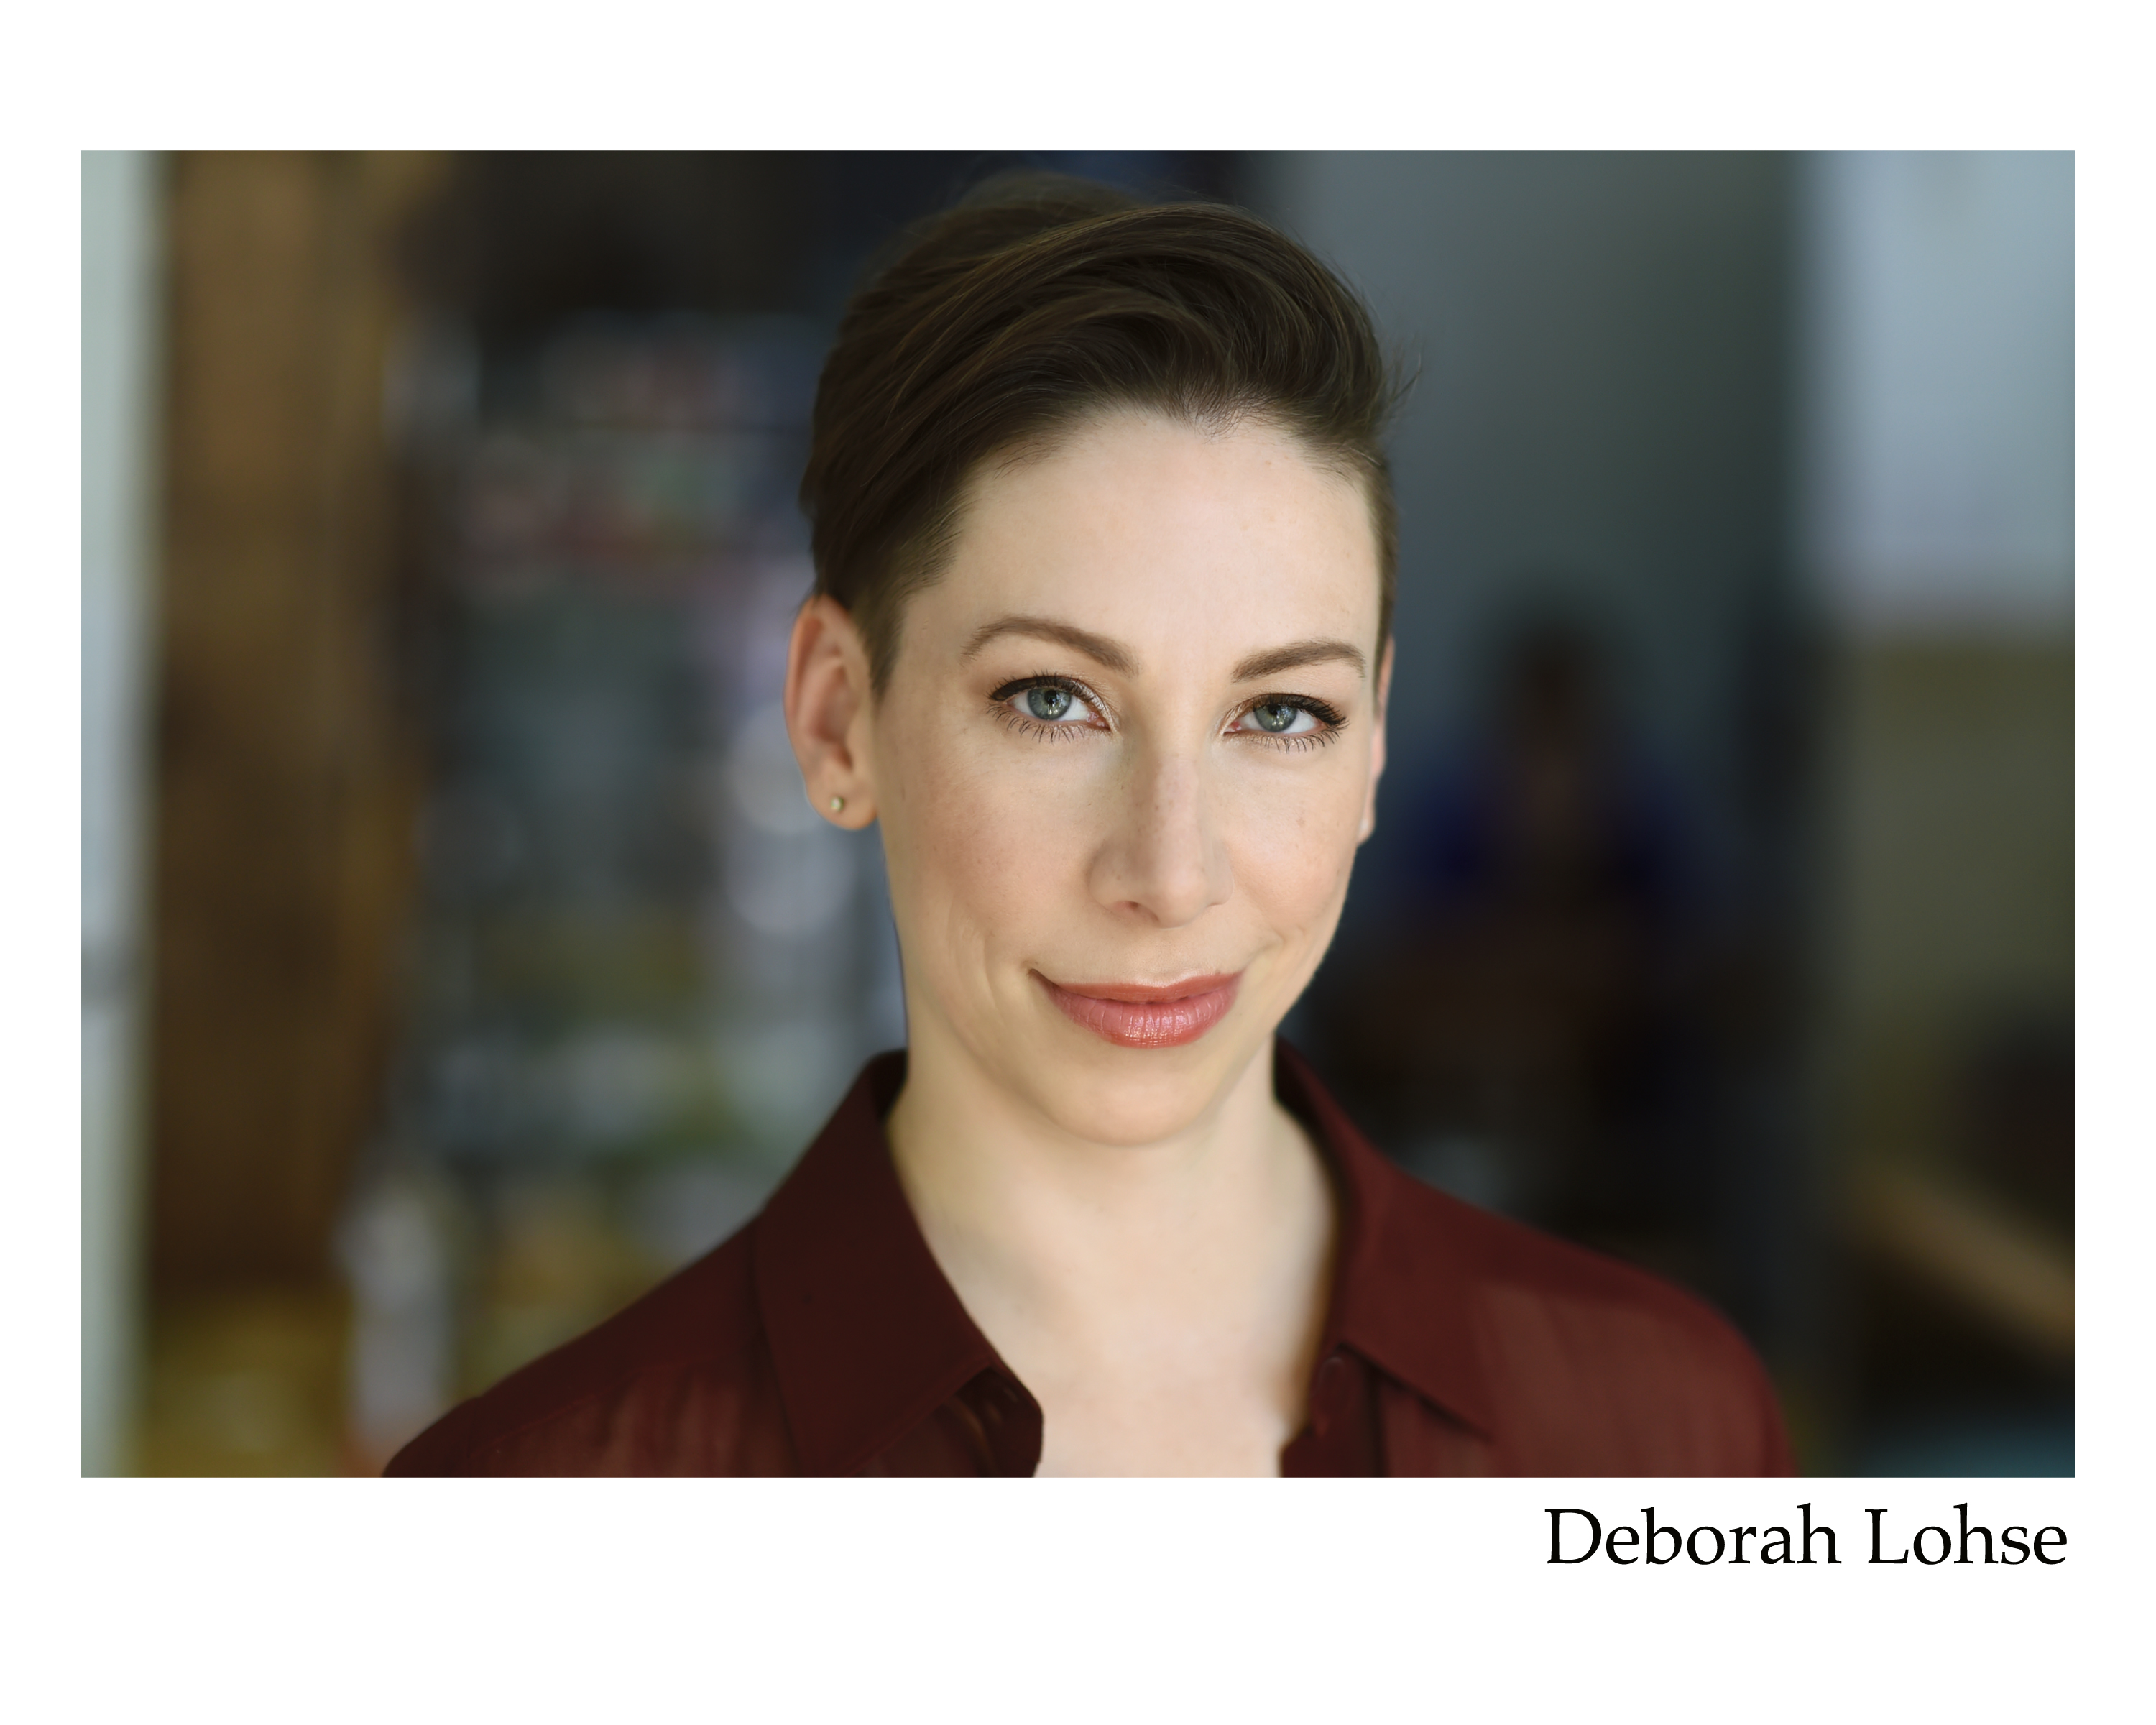 Deborah Lohse - Printable Headshot